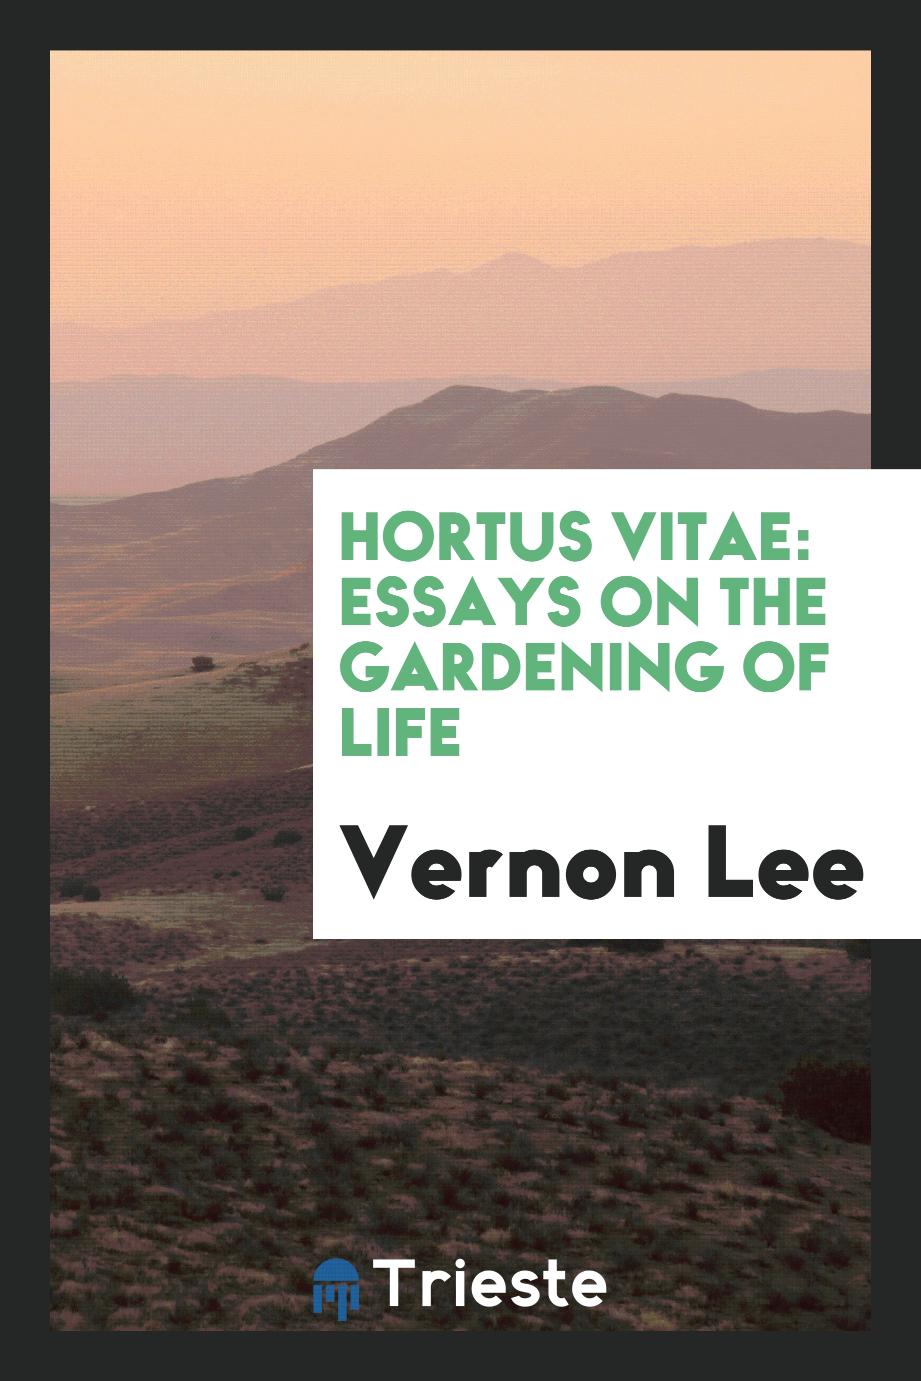 Hortus vitae: essays on the gardening of life